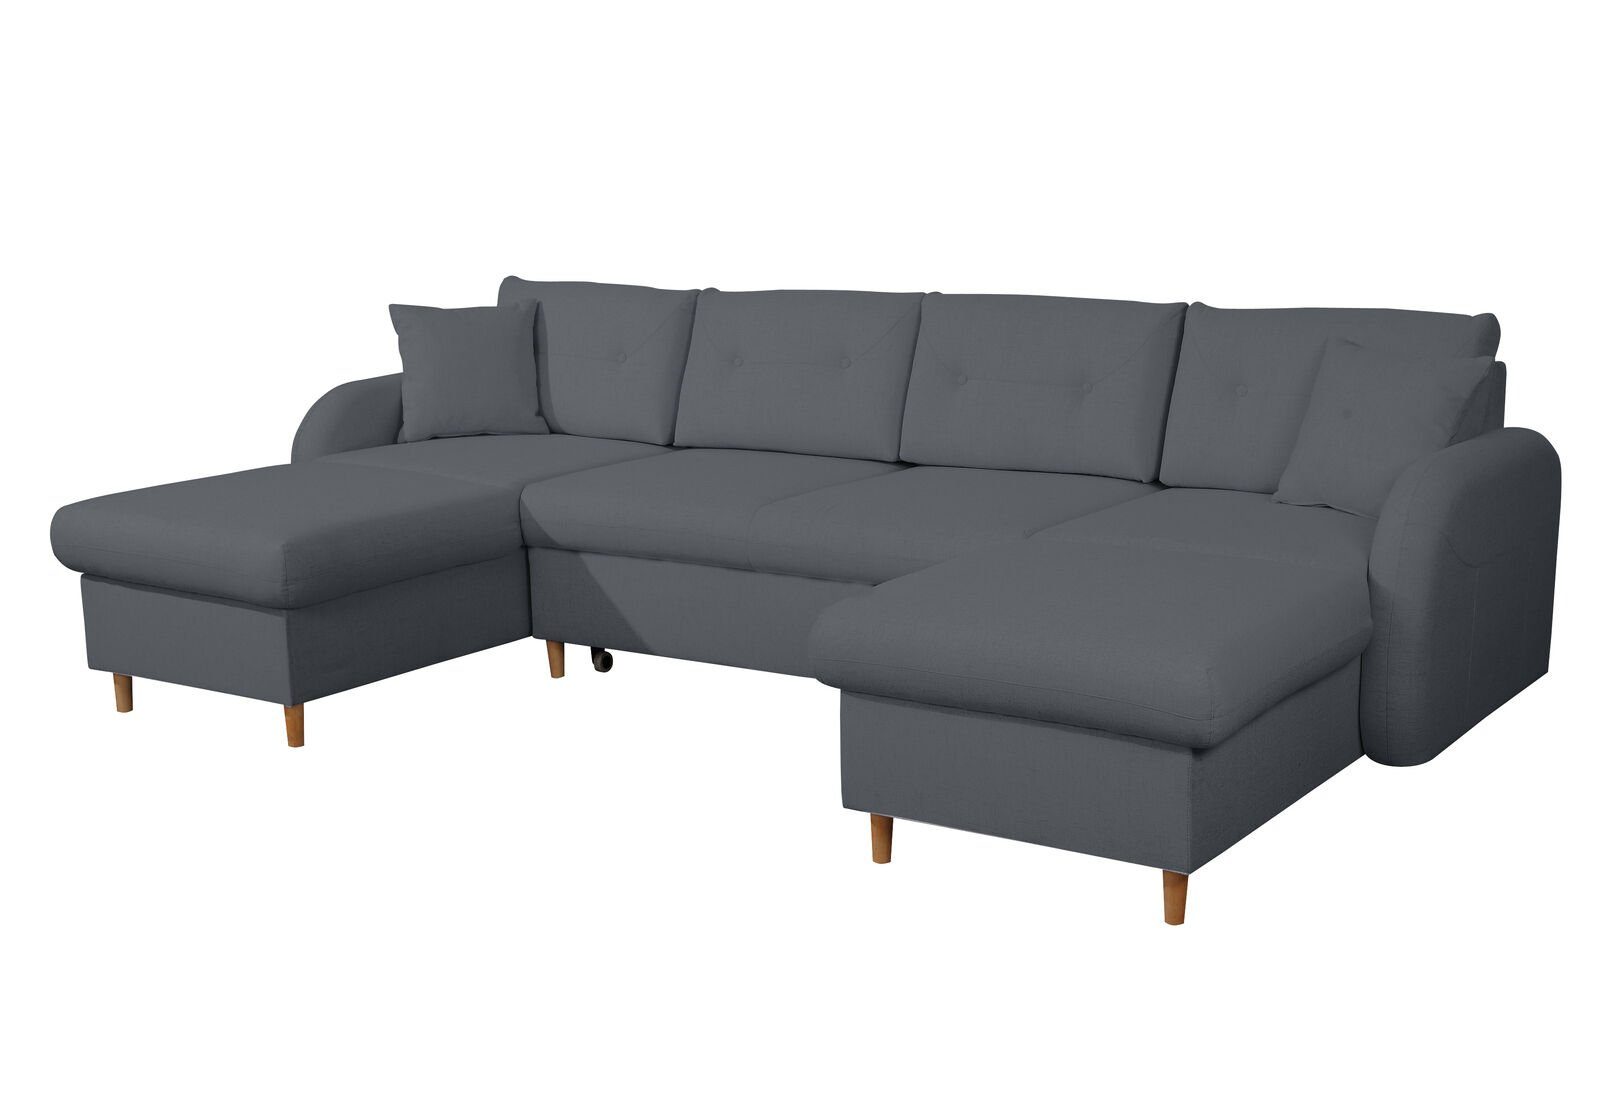 JVmoebel Ecksofa Wohnlandschaft Ecksofa Europe Design, in U-Form Stoff Couch Bettfunktion Schwarz Made